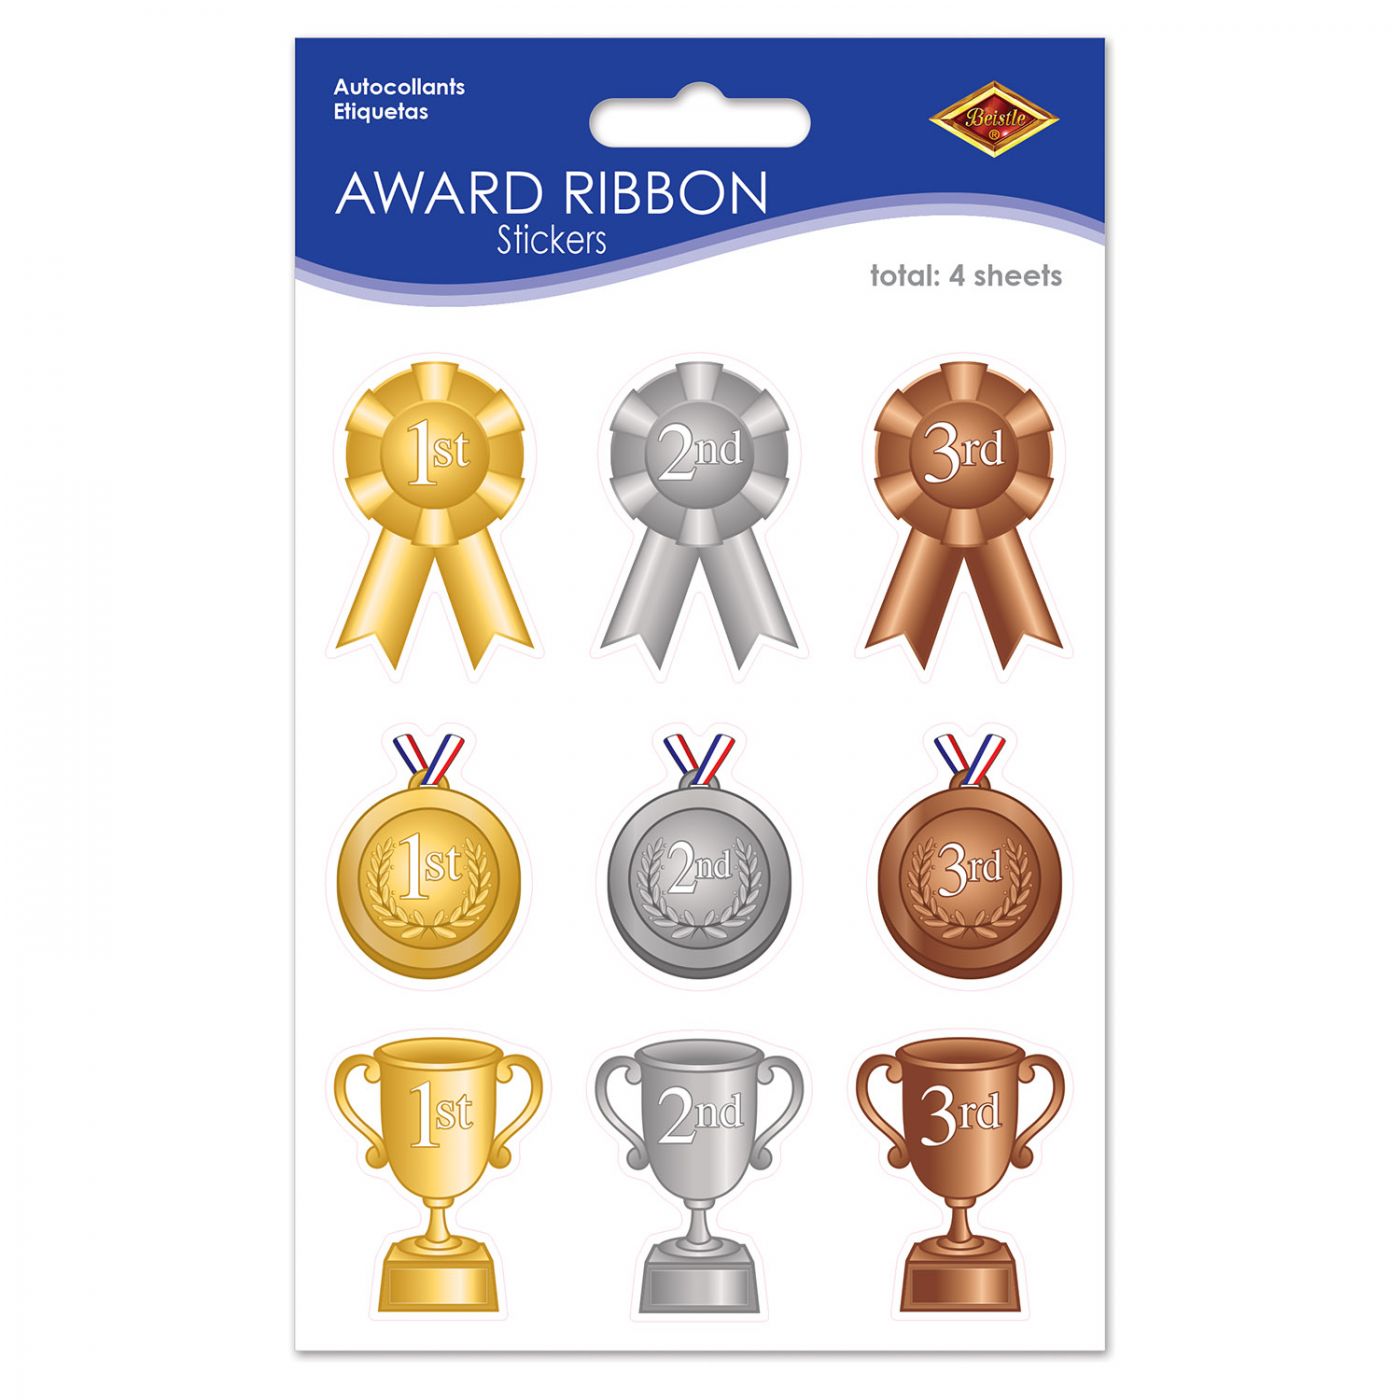 Award Ribbon Stickers (12) image